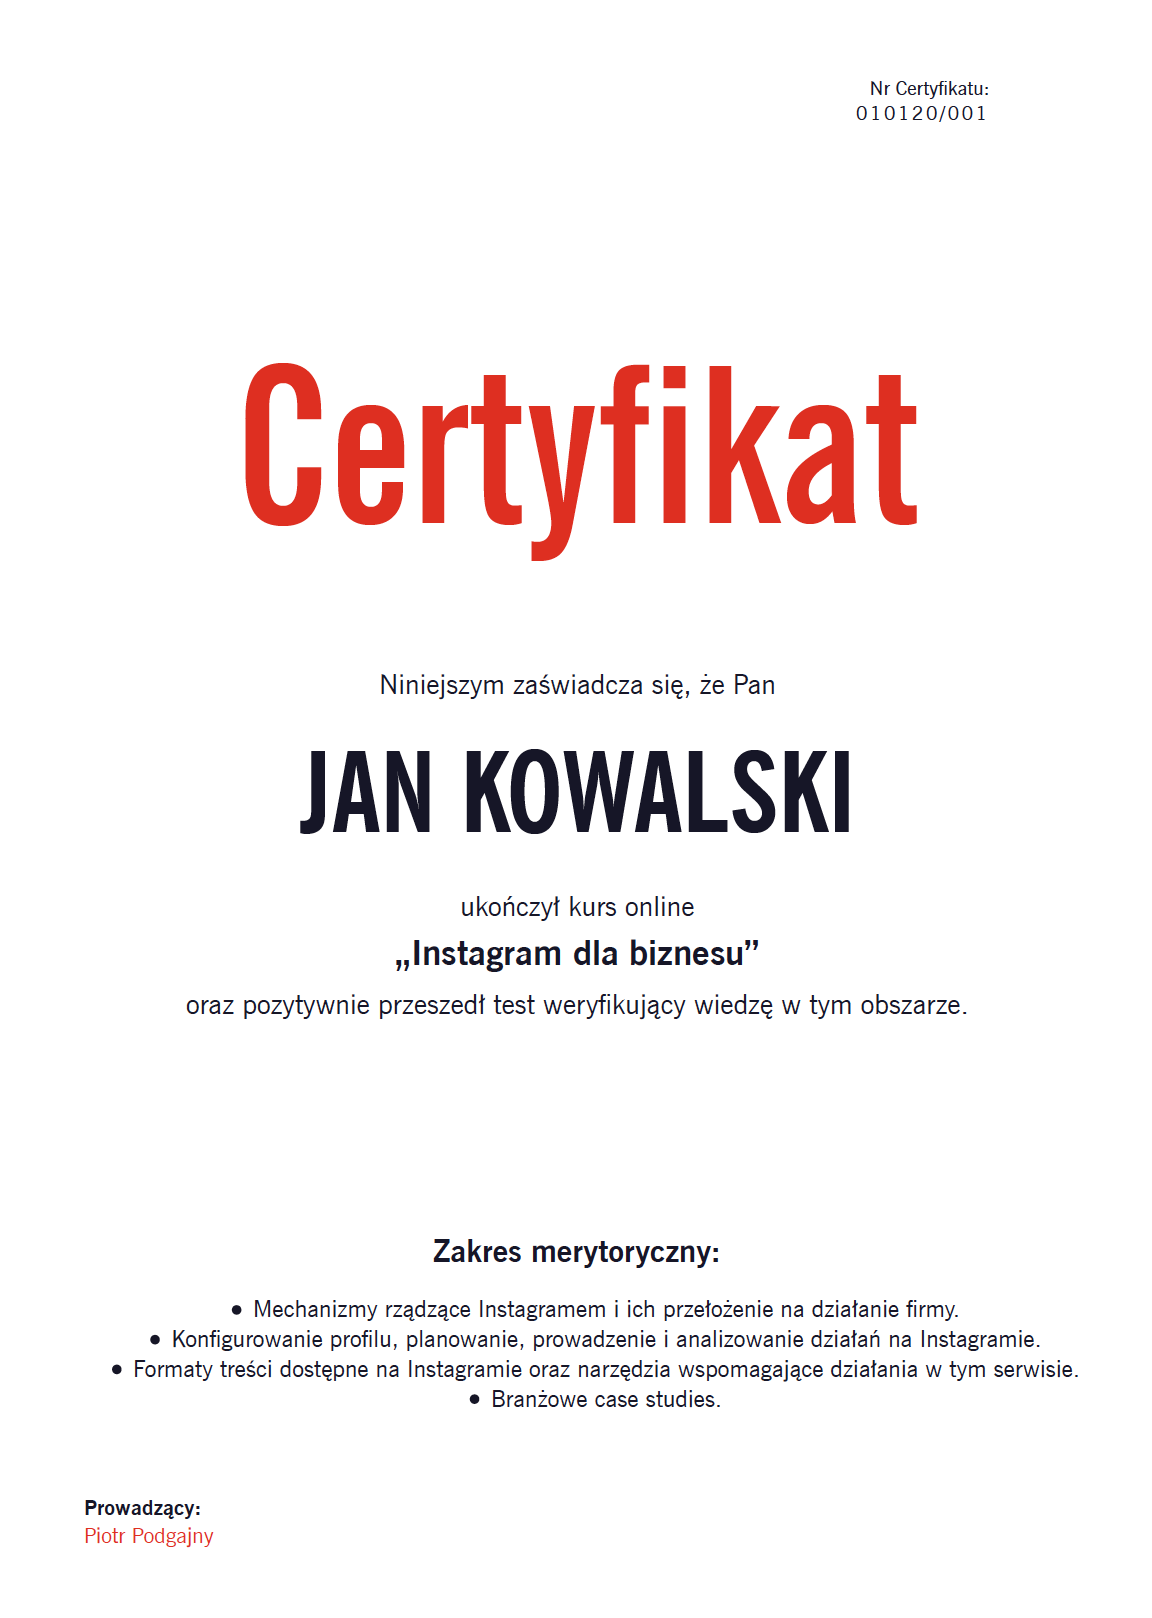 Instagram marketing kurs online - certyfikat